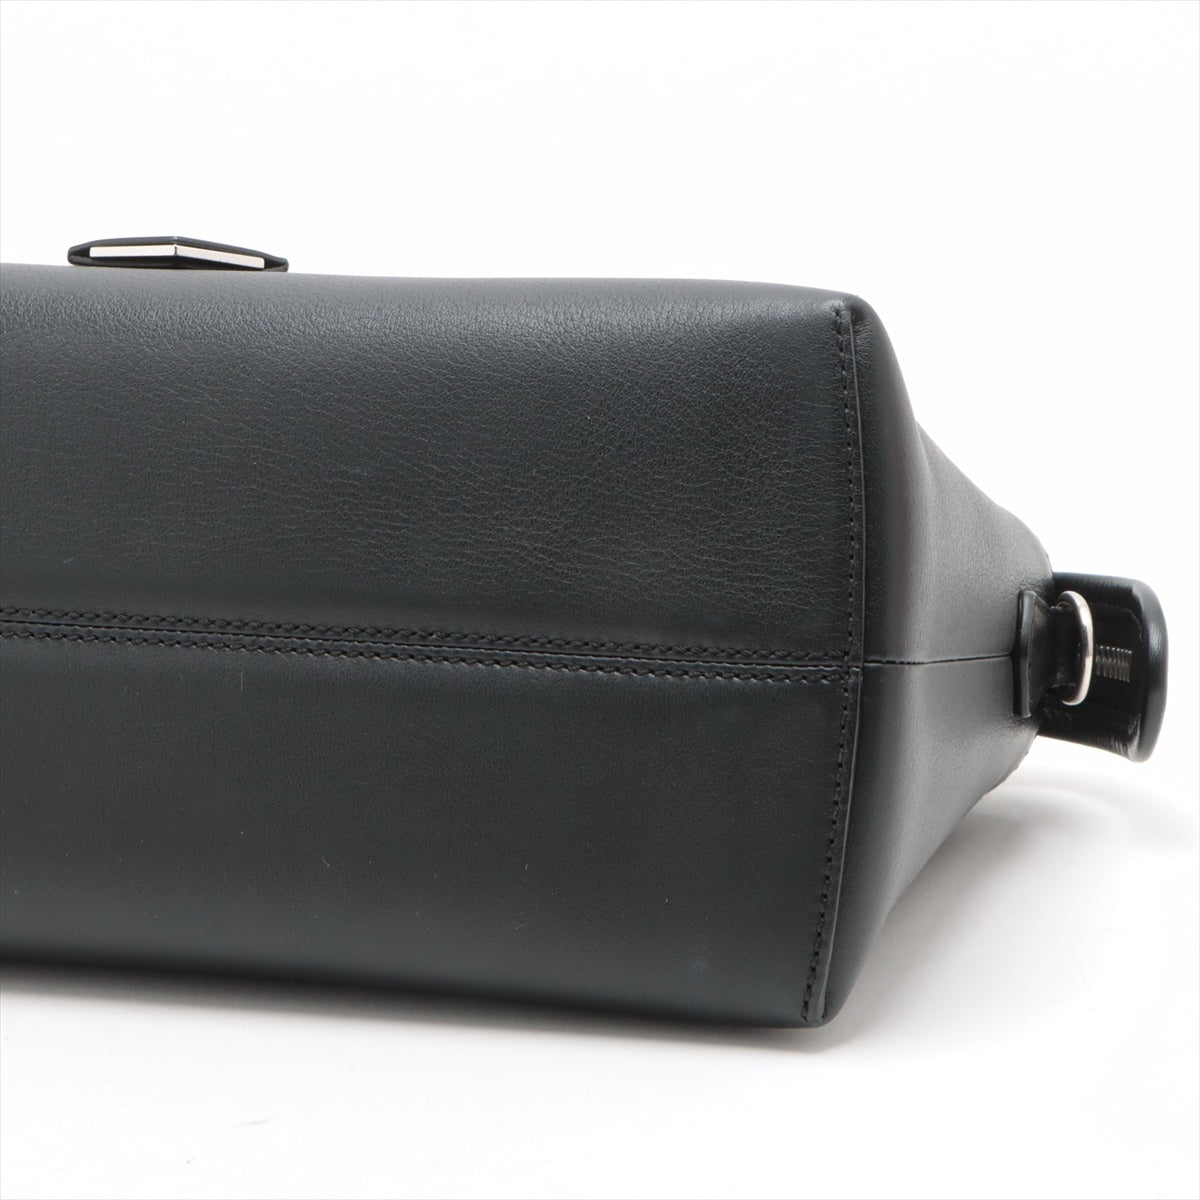 Fendi By the Way Medium Leather 2way handbag Black 8BL146